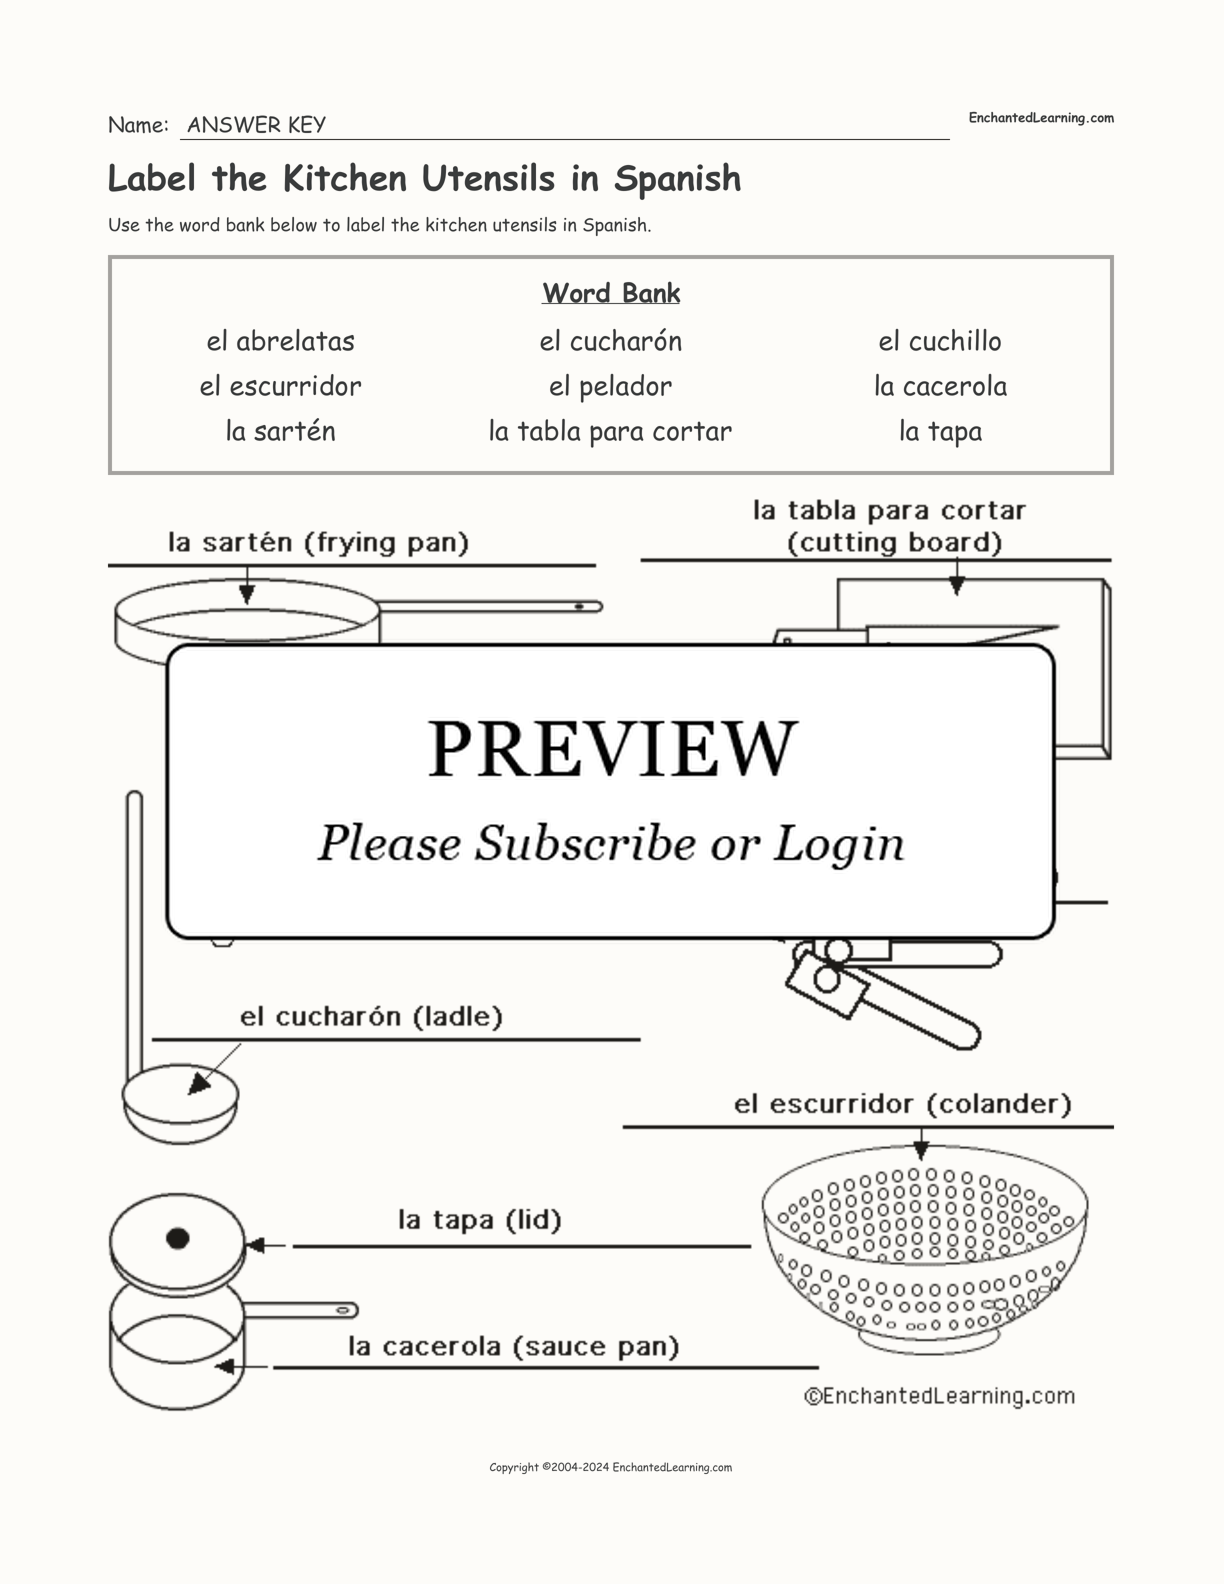 Label the Kitchen Utensils in Spanish interactive worksheet page 2